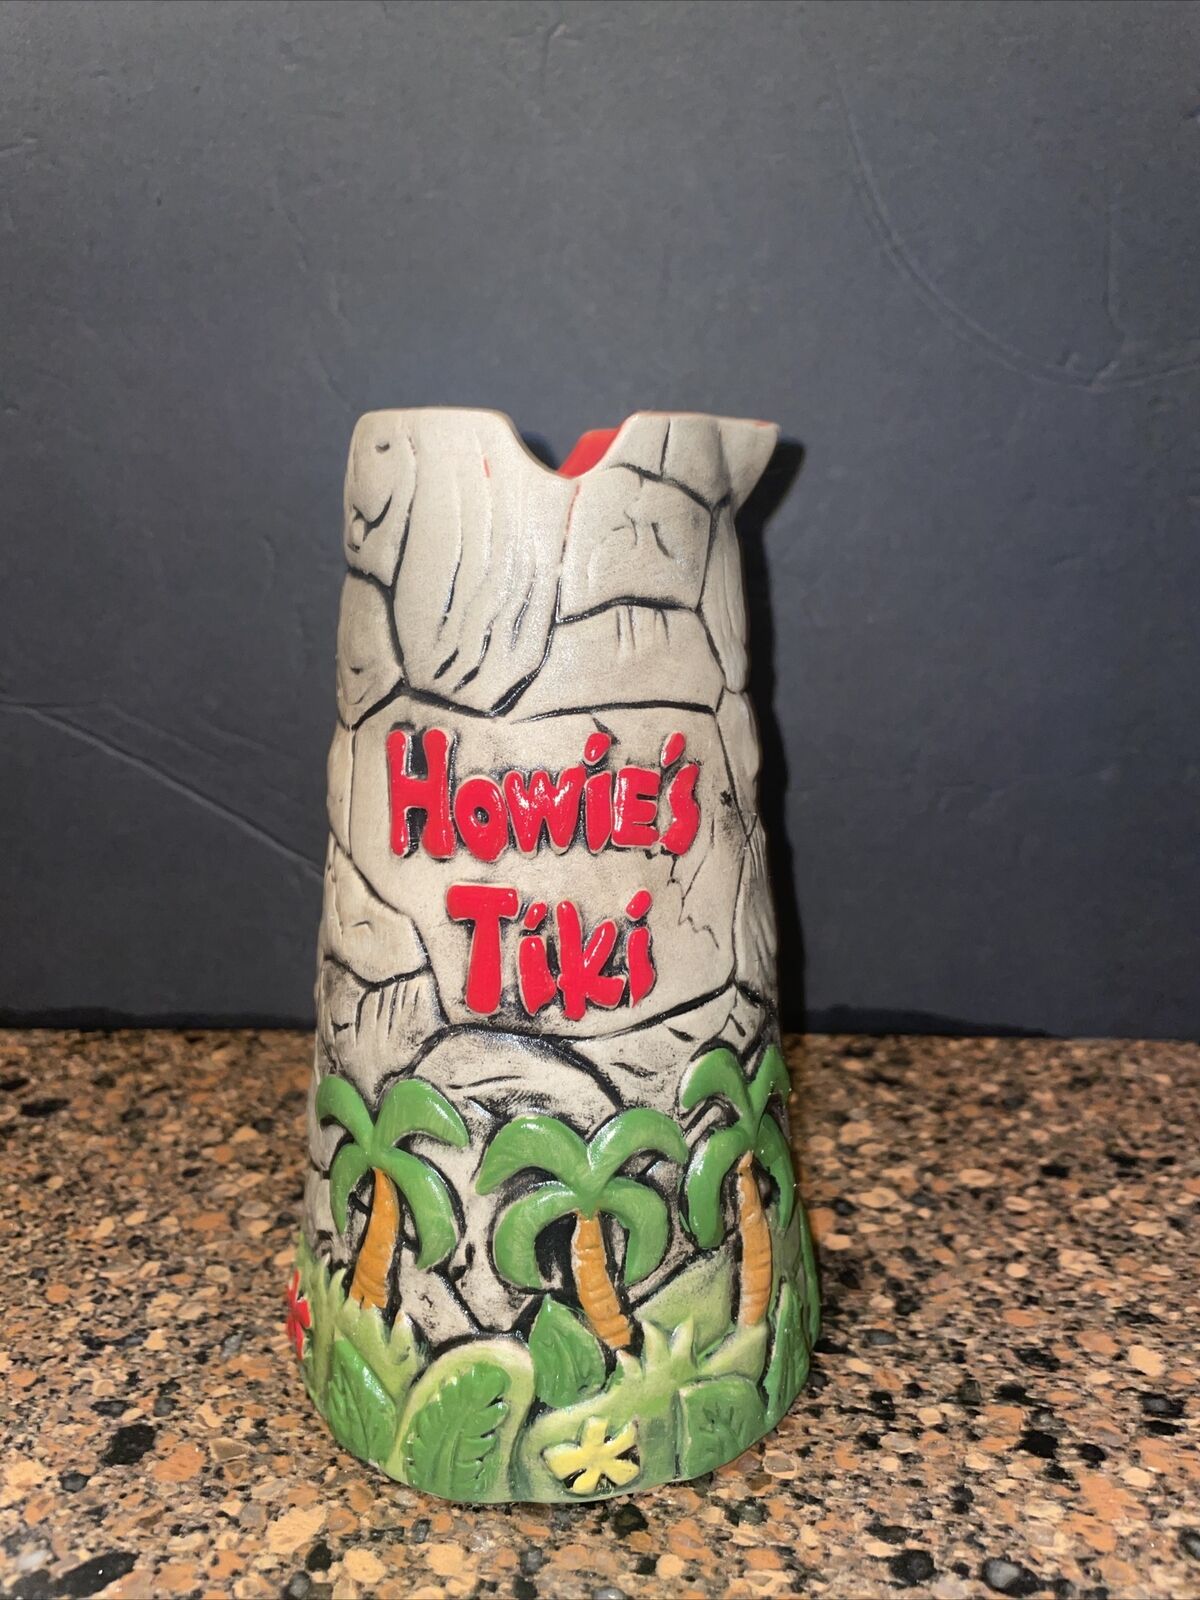 2016 Howie\'s Tiki Volcano Mug by Ken Ruzic for Tiki Farm No Lid Only 500 Made